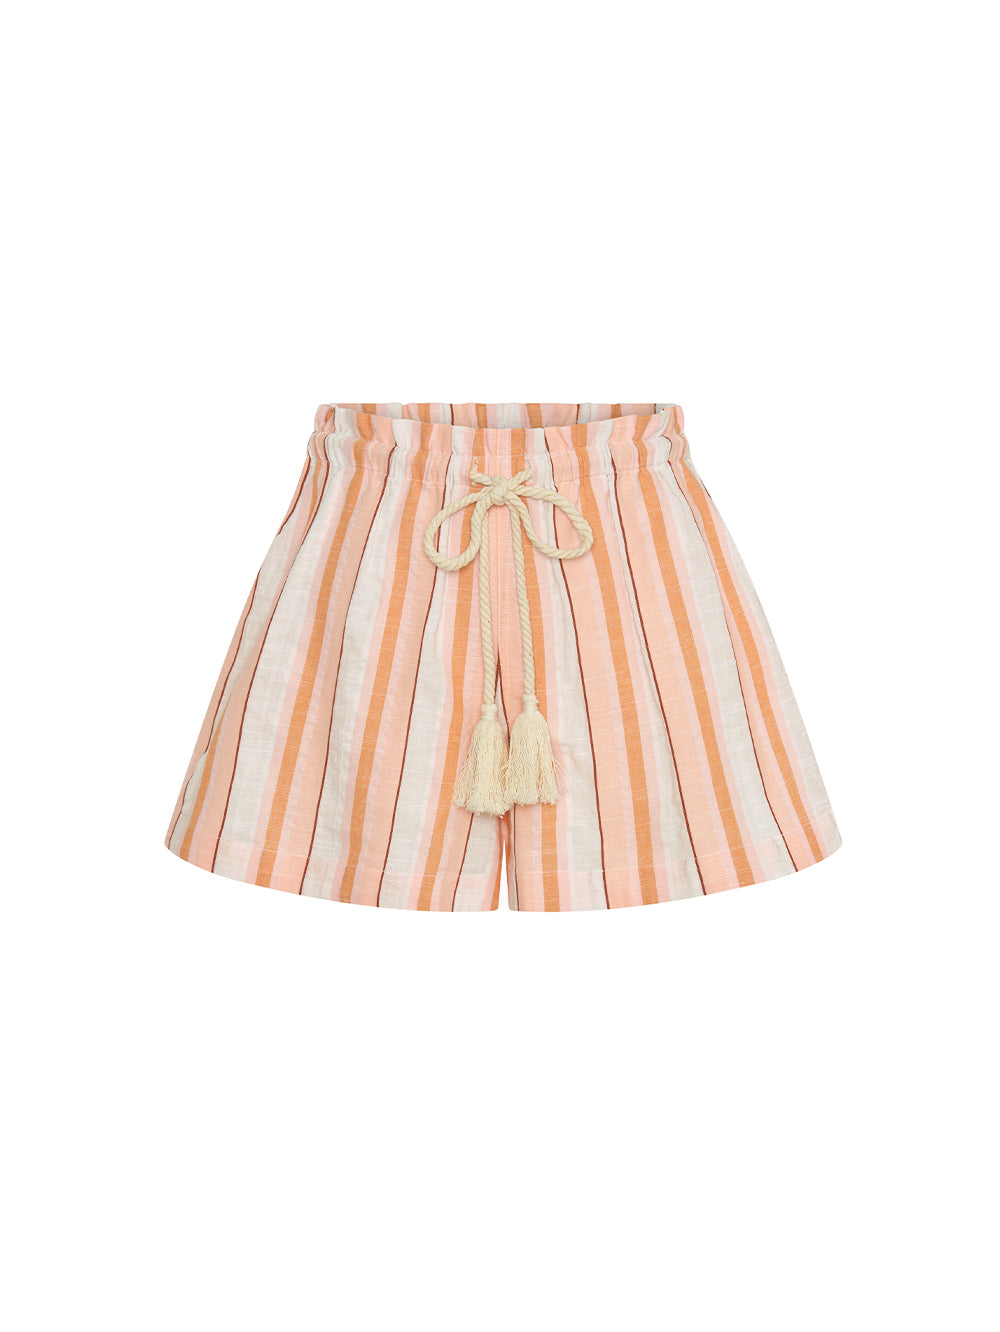 KIVARI Mae Short | Pink and orange stripe short with rope tie